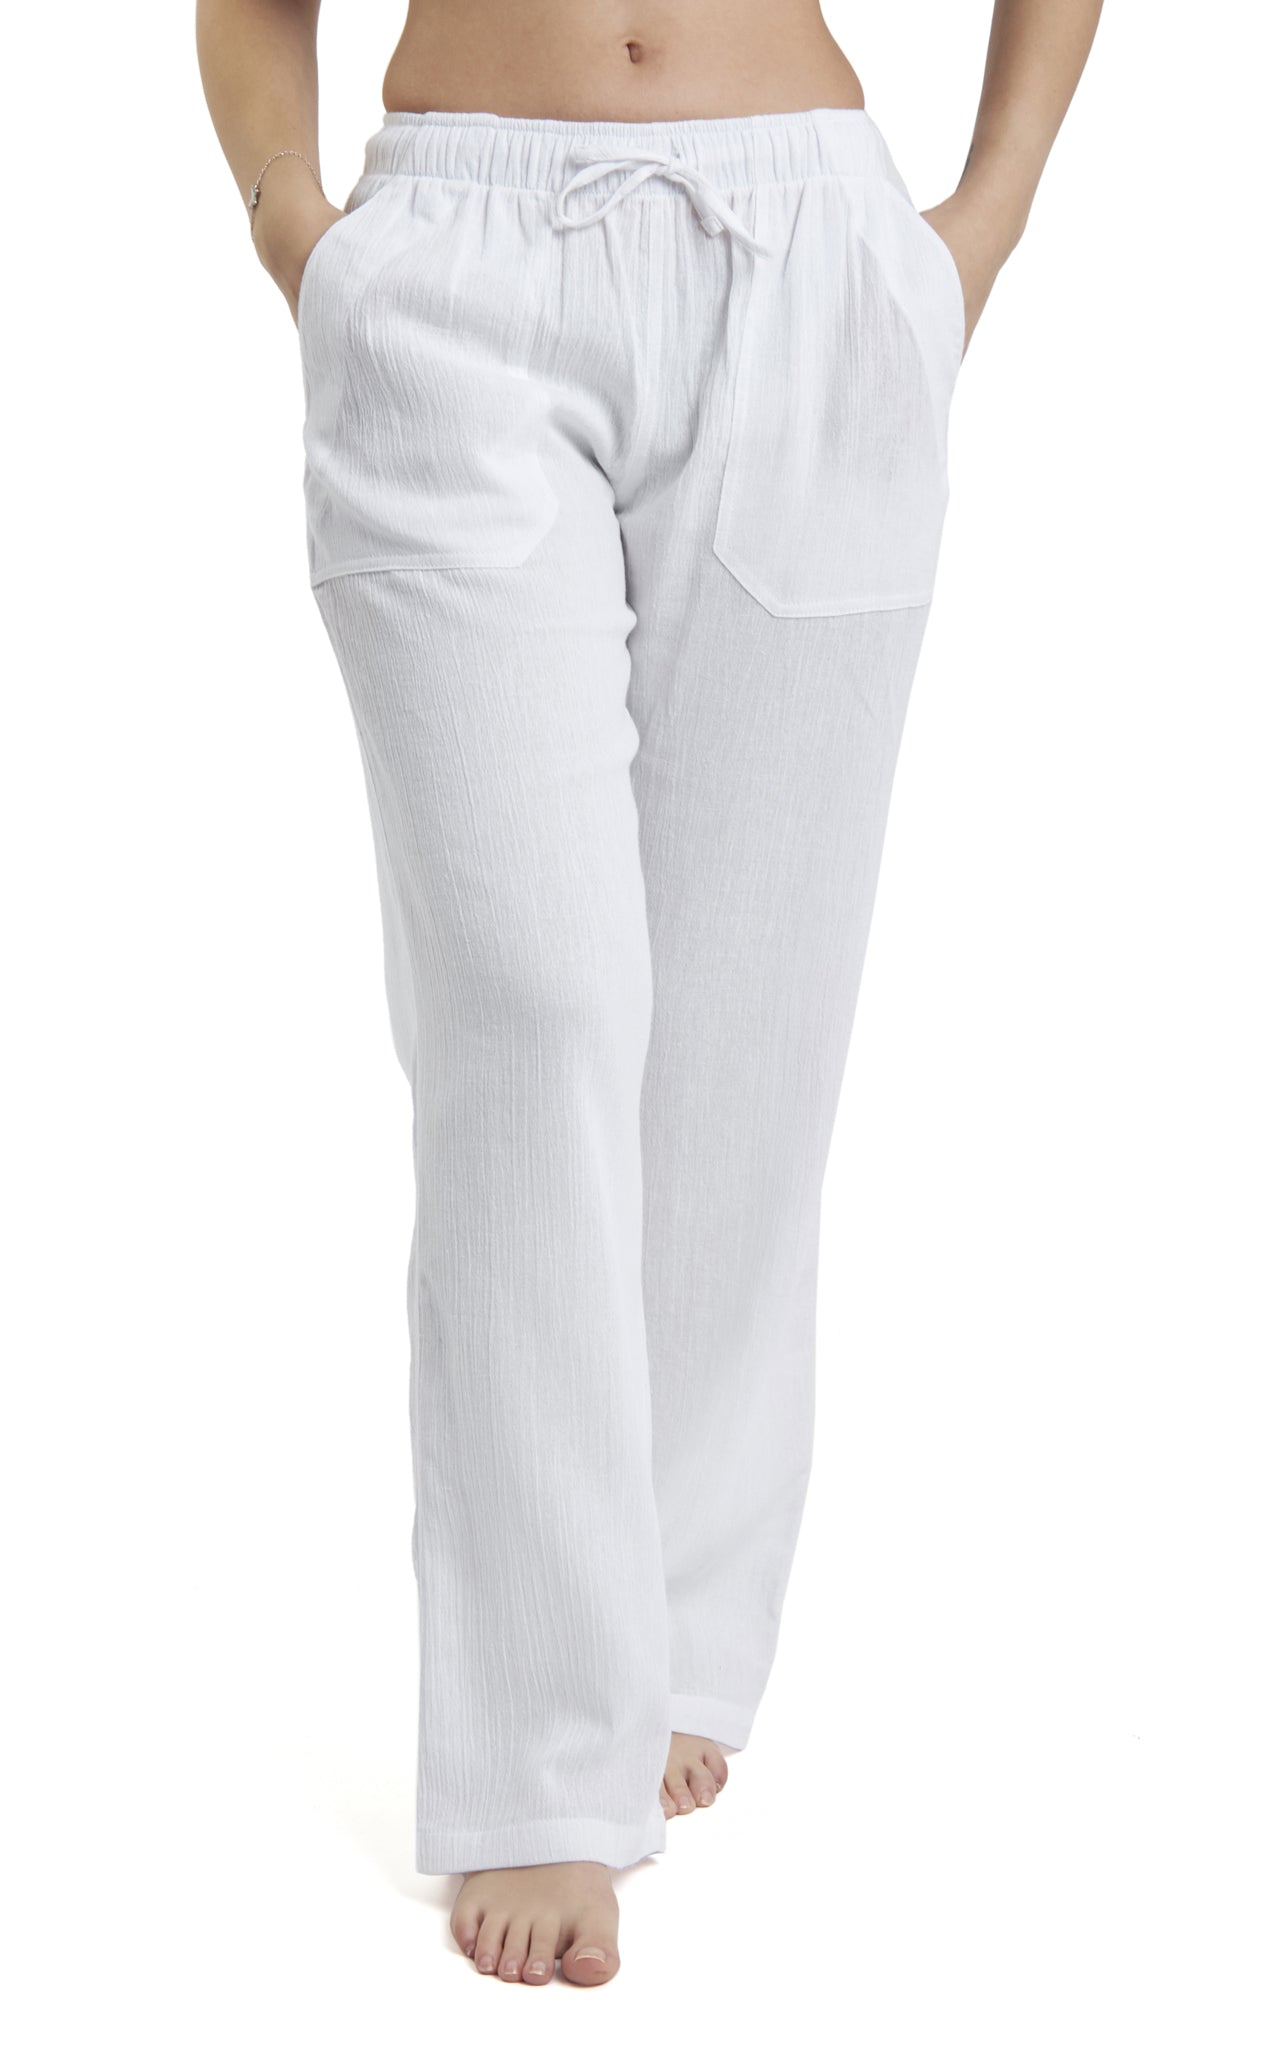 Women's Gauze Cotton PJ & Beach Pants with Pockets (White)